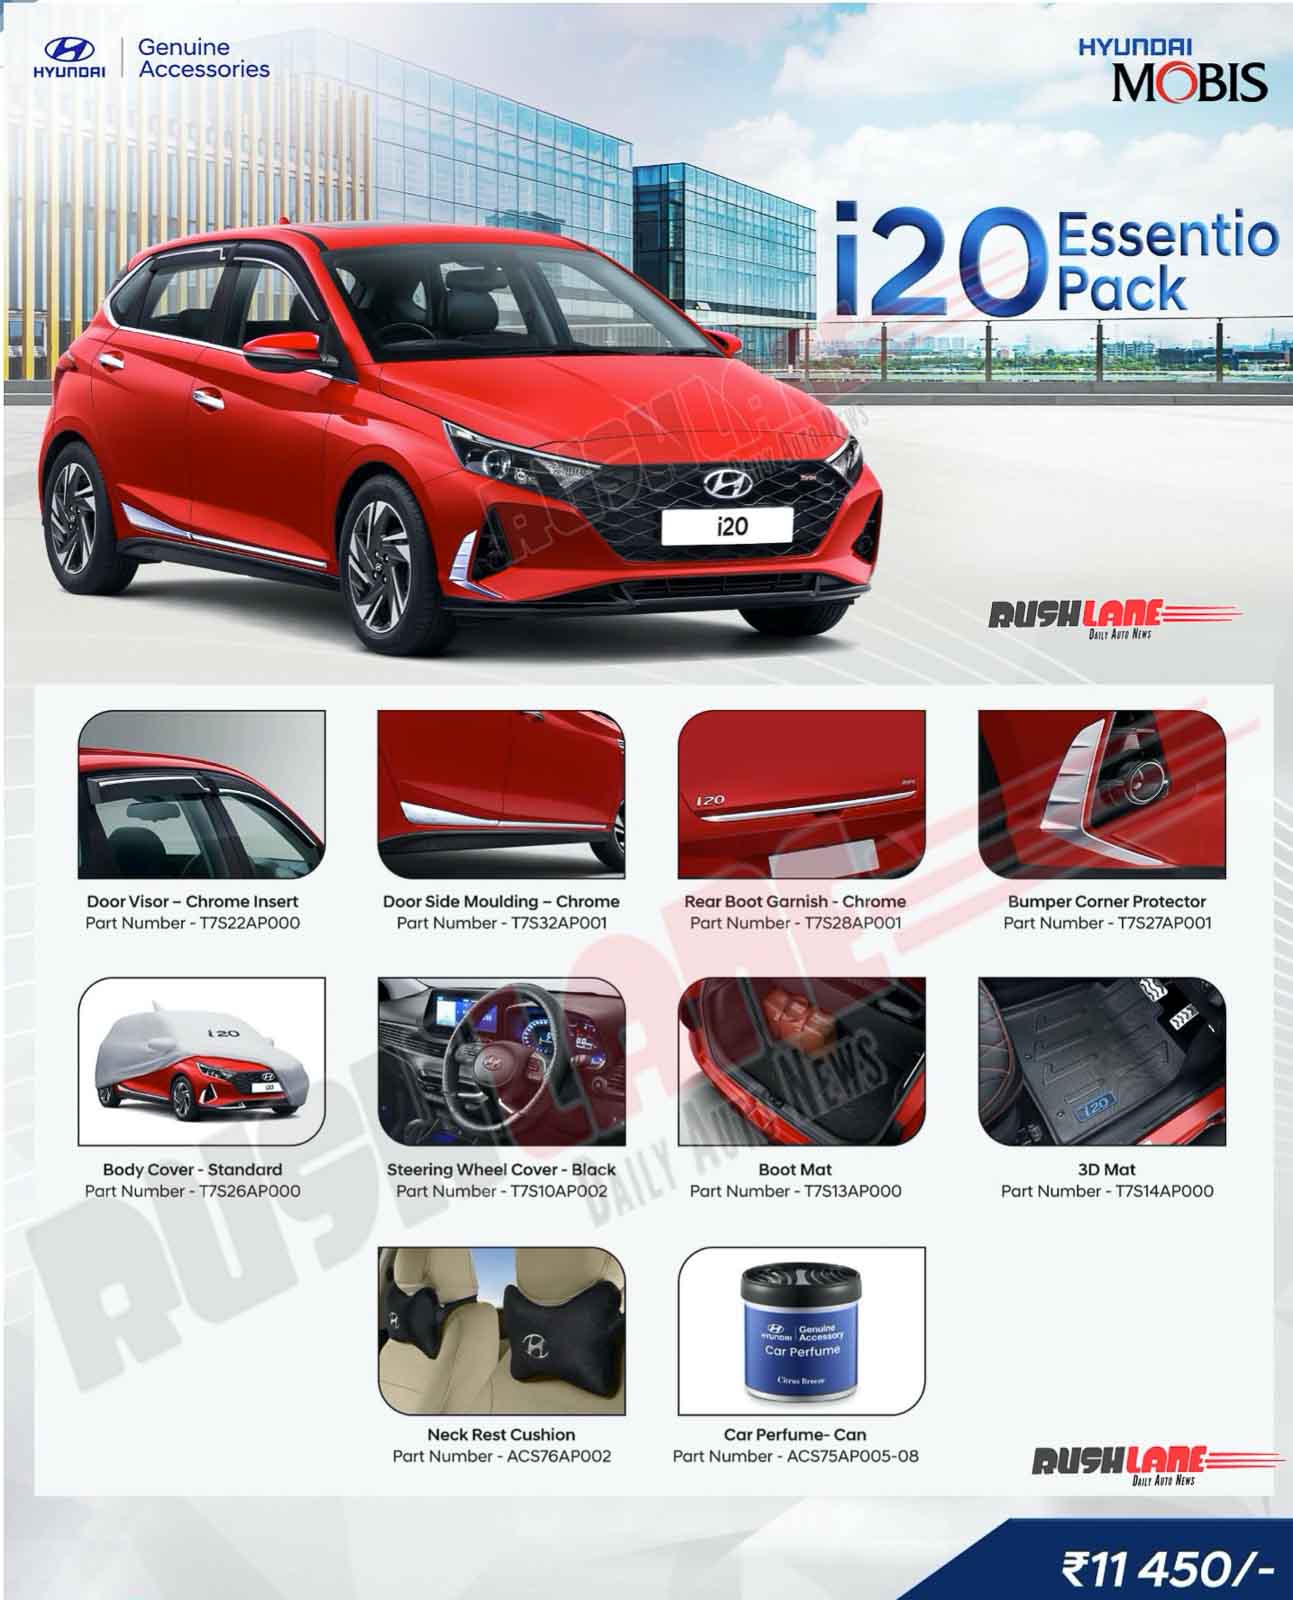 New Hyundai i20 Accessory Packs Price Details - Essentio, Premium